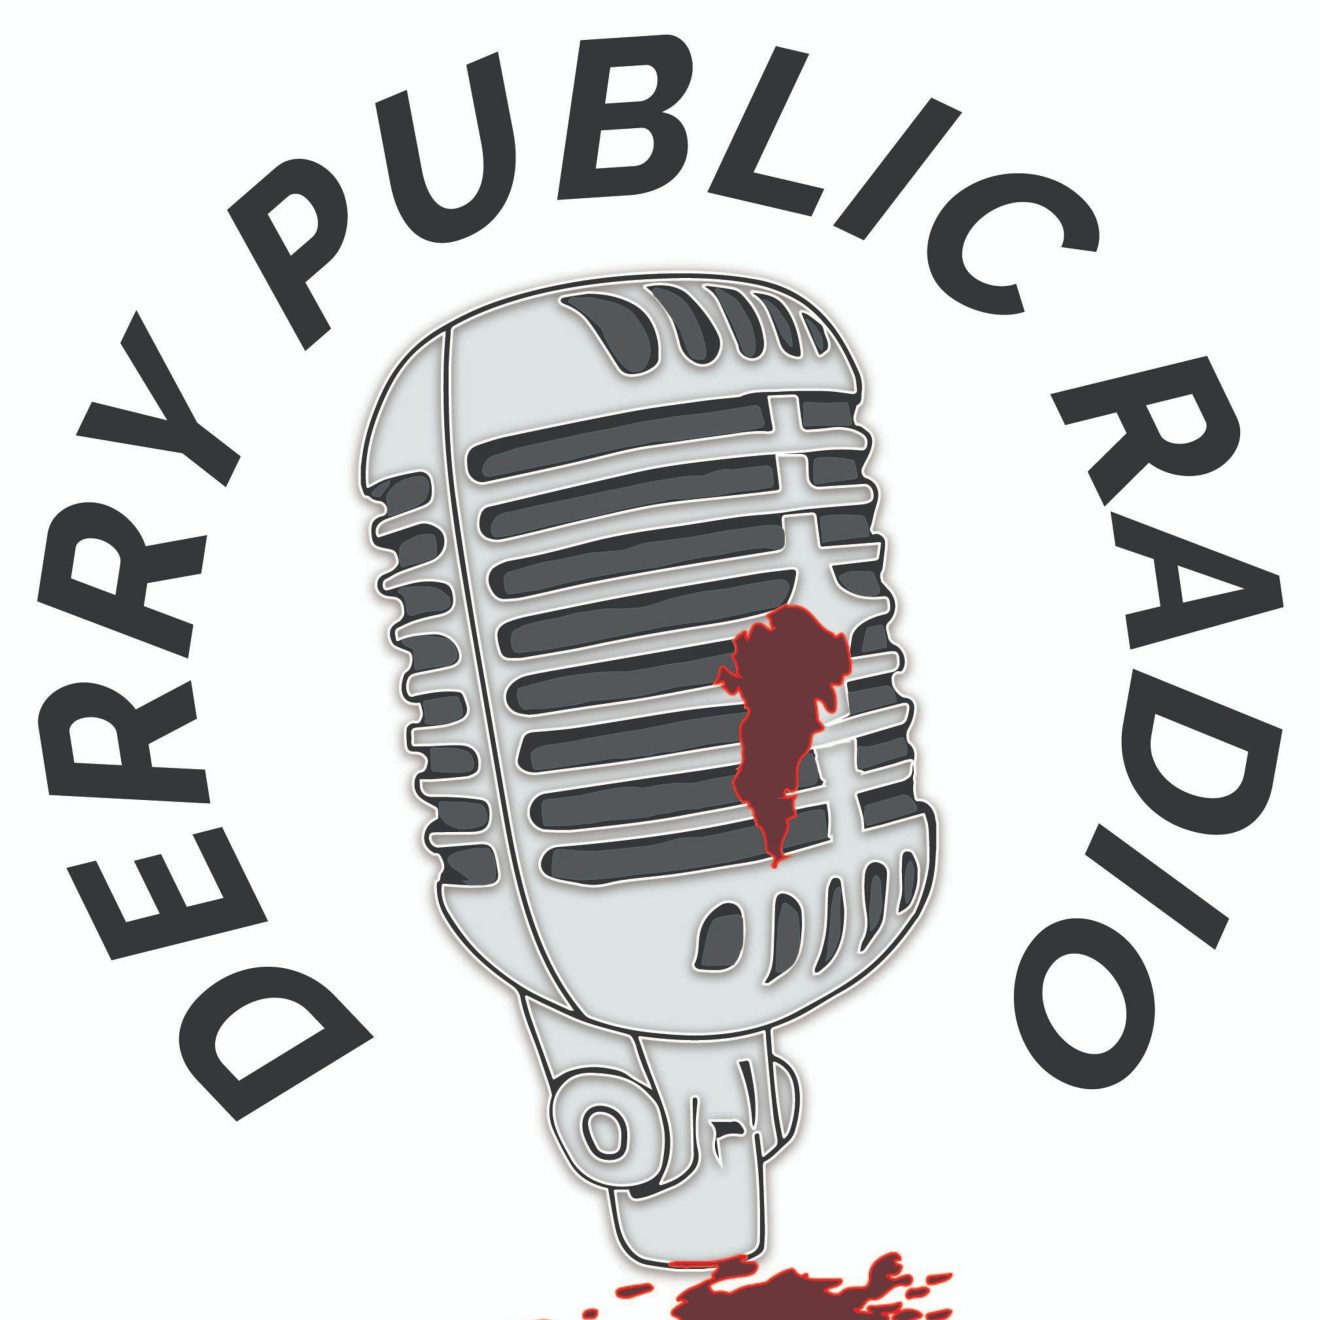 Derry Public Radio Interviews Aidan White